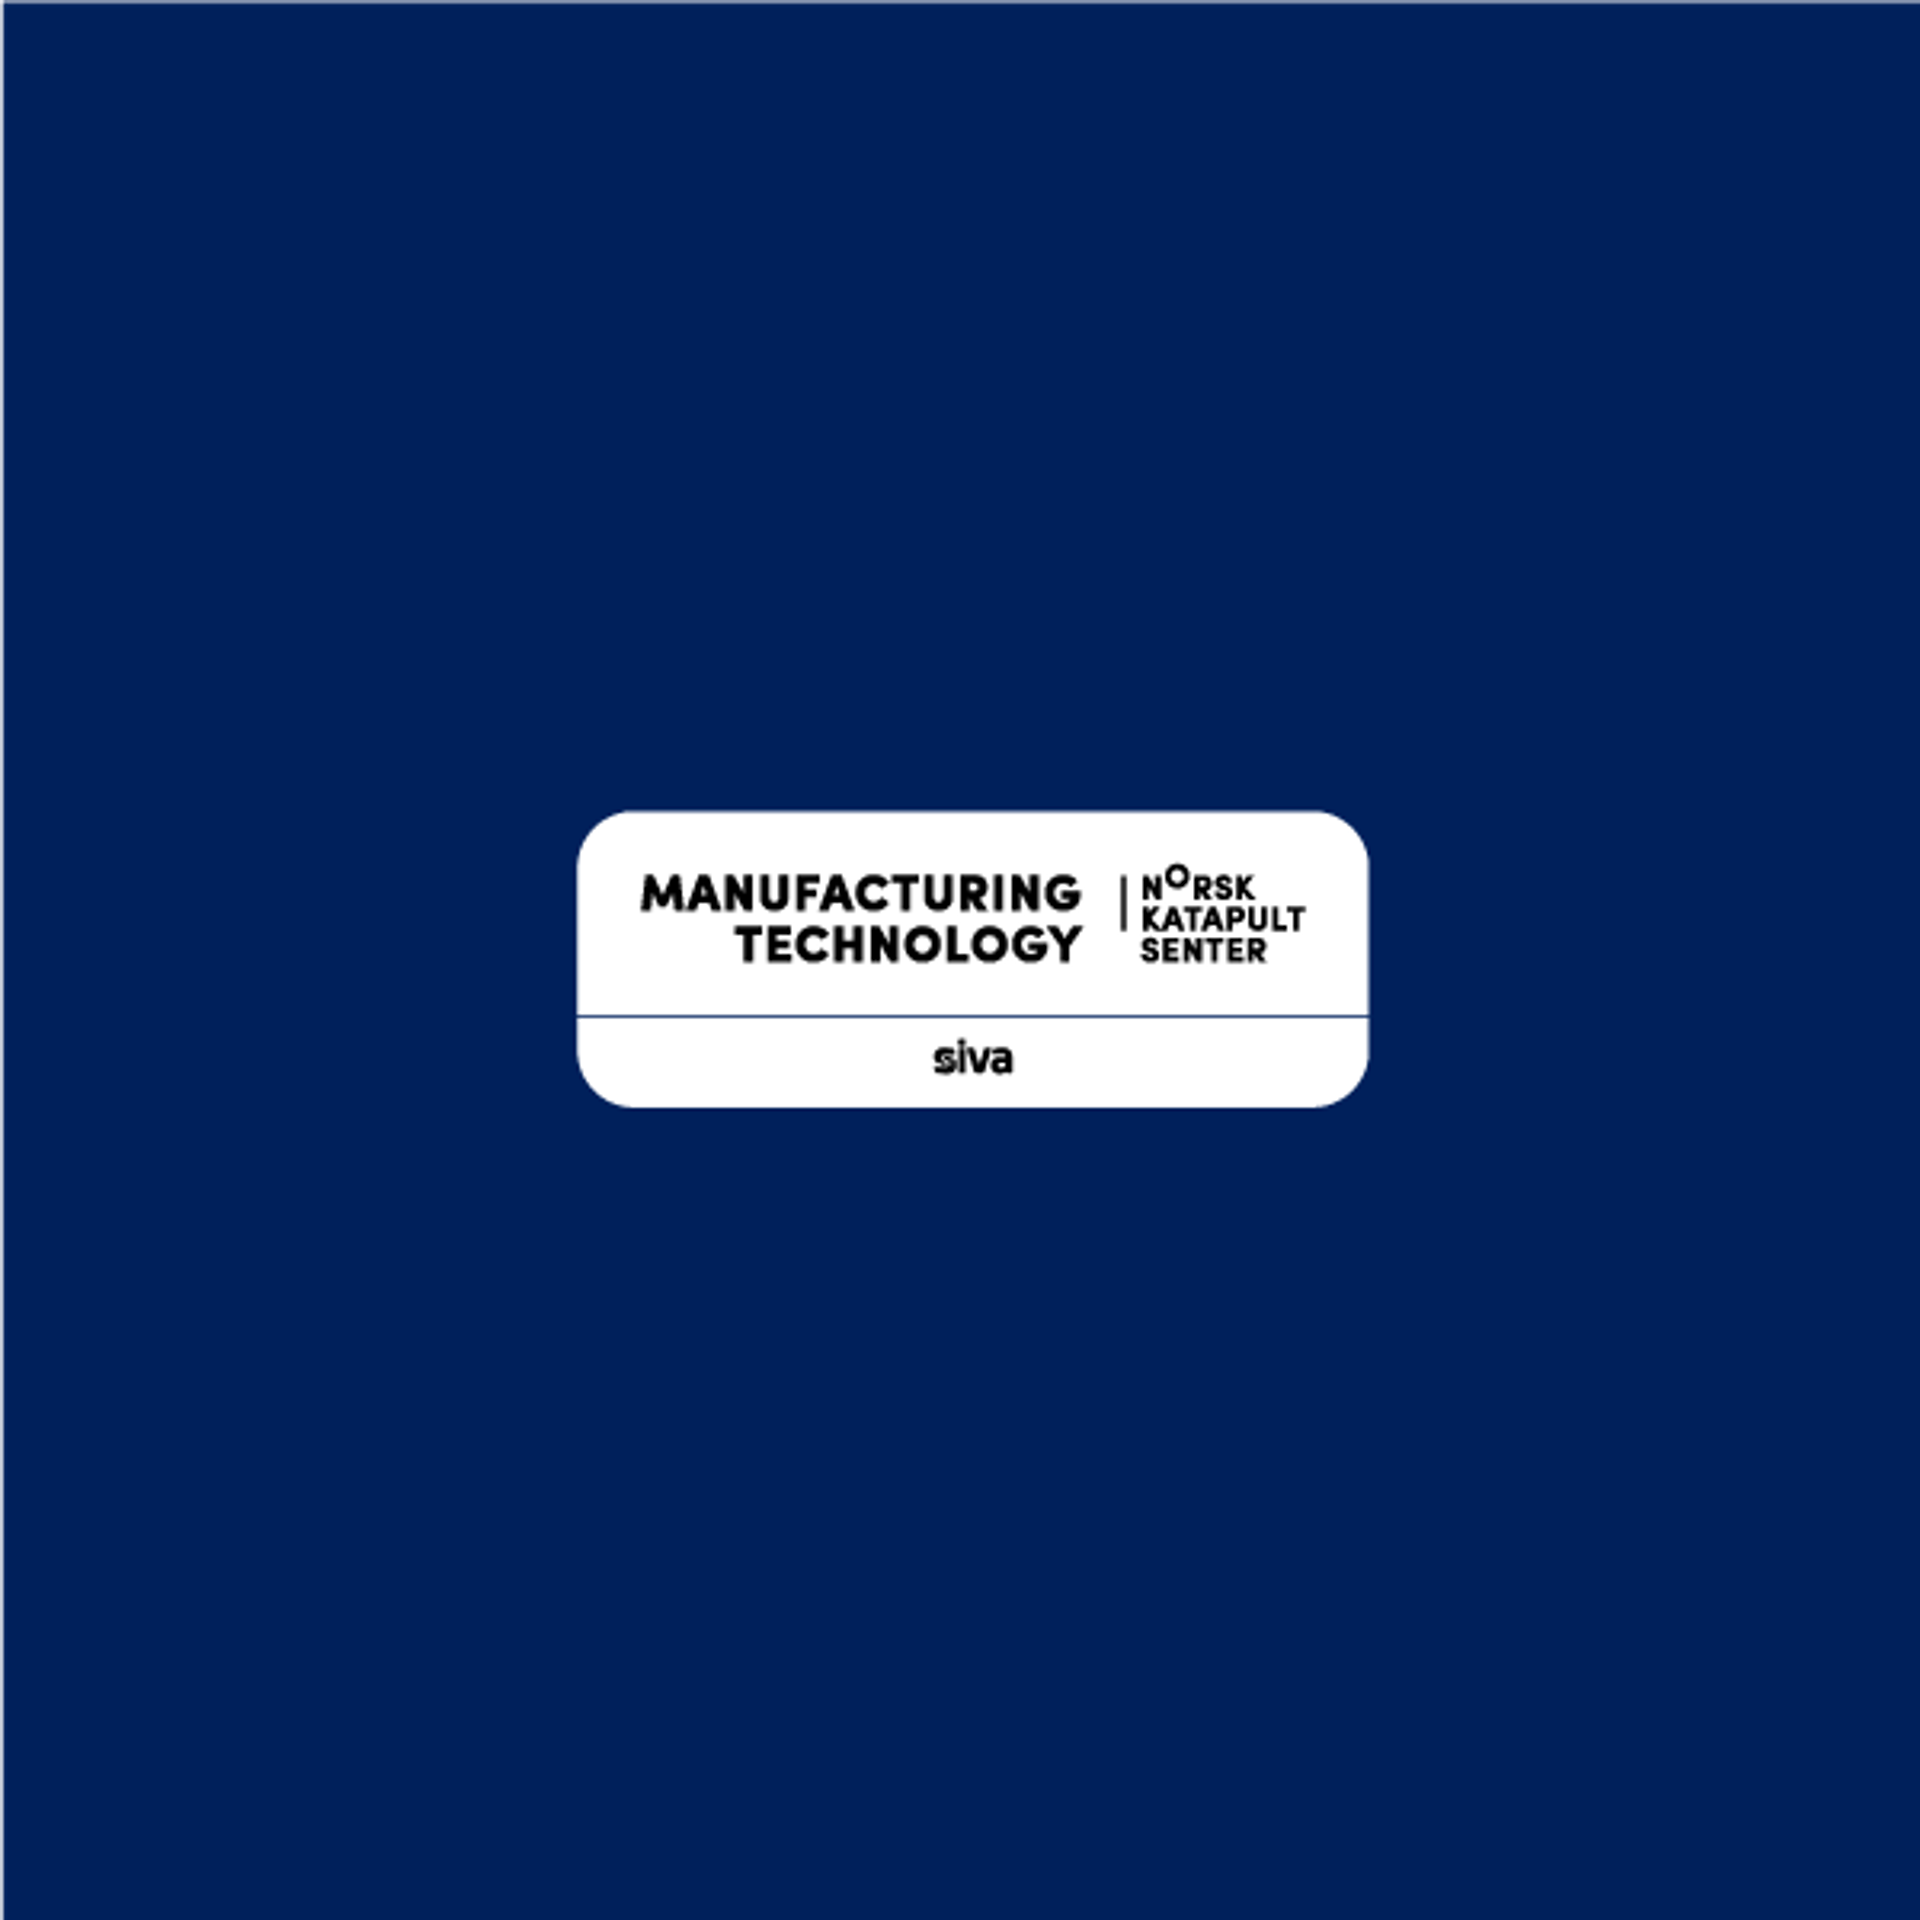 Manufacturing technology logo